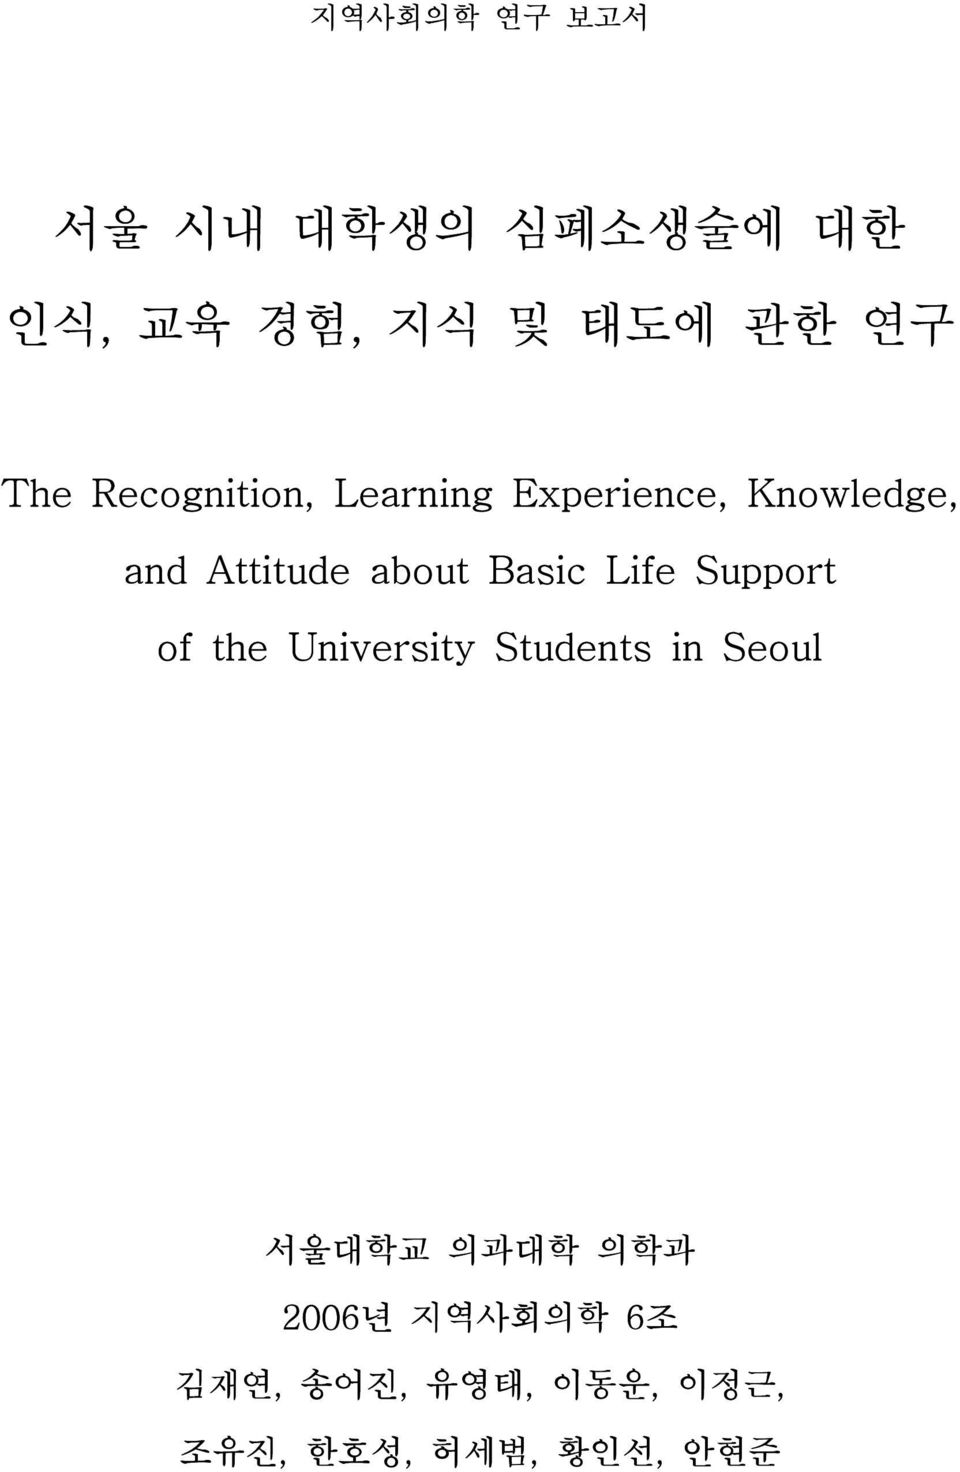 Basic Life Support of the University Students in Seoul 서울대학교 의과대학